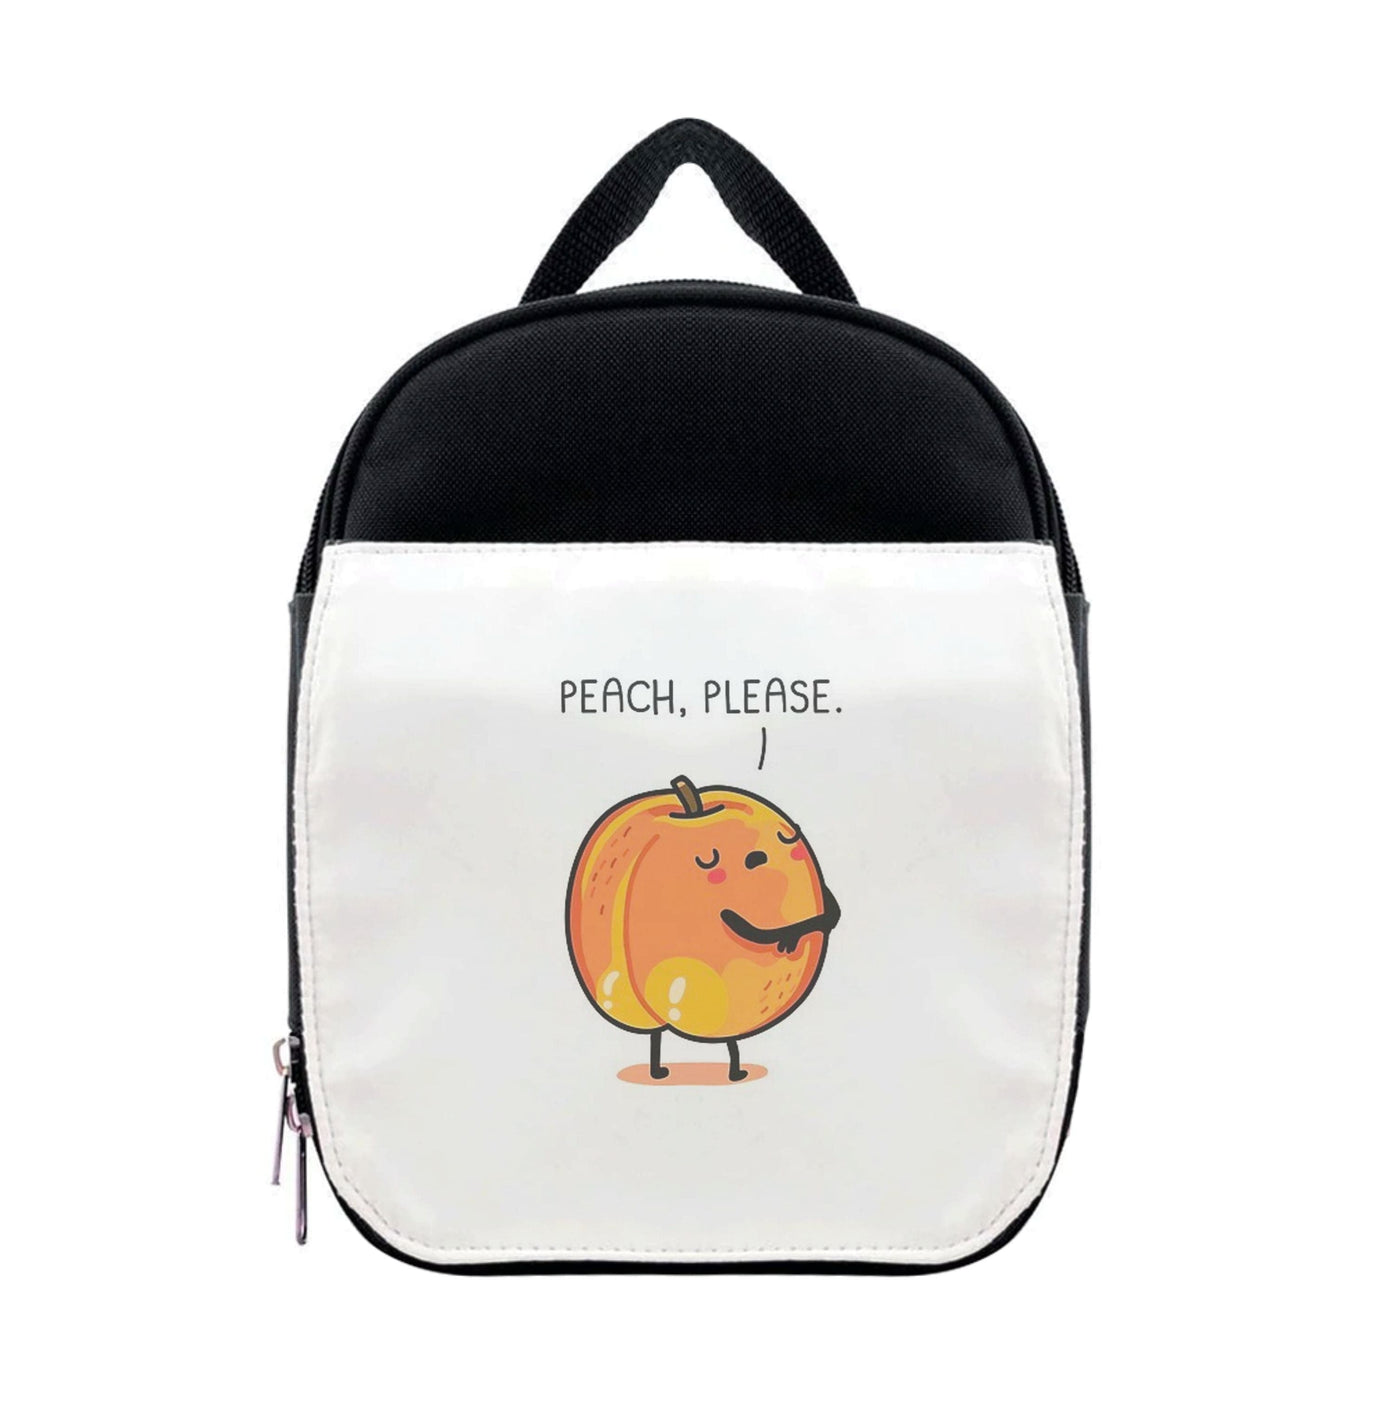 Peach, Please - Funny Pun Lunchbox